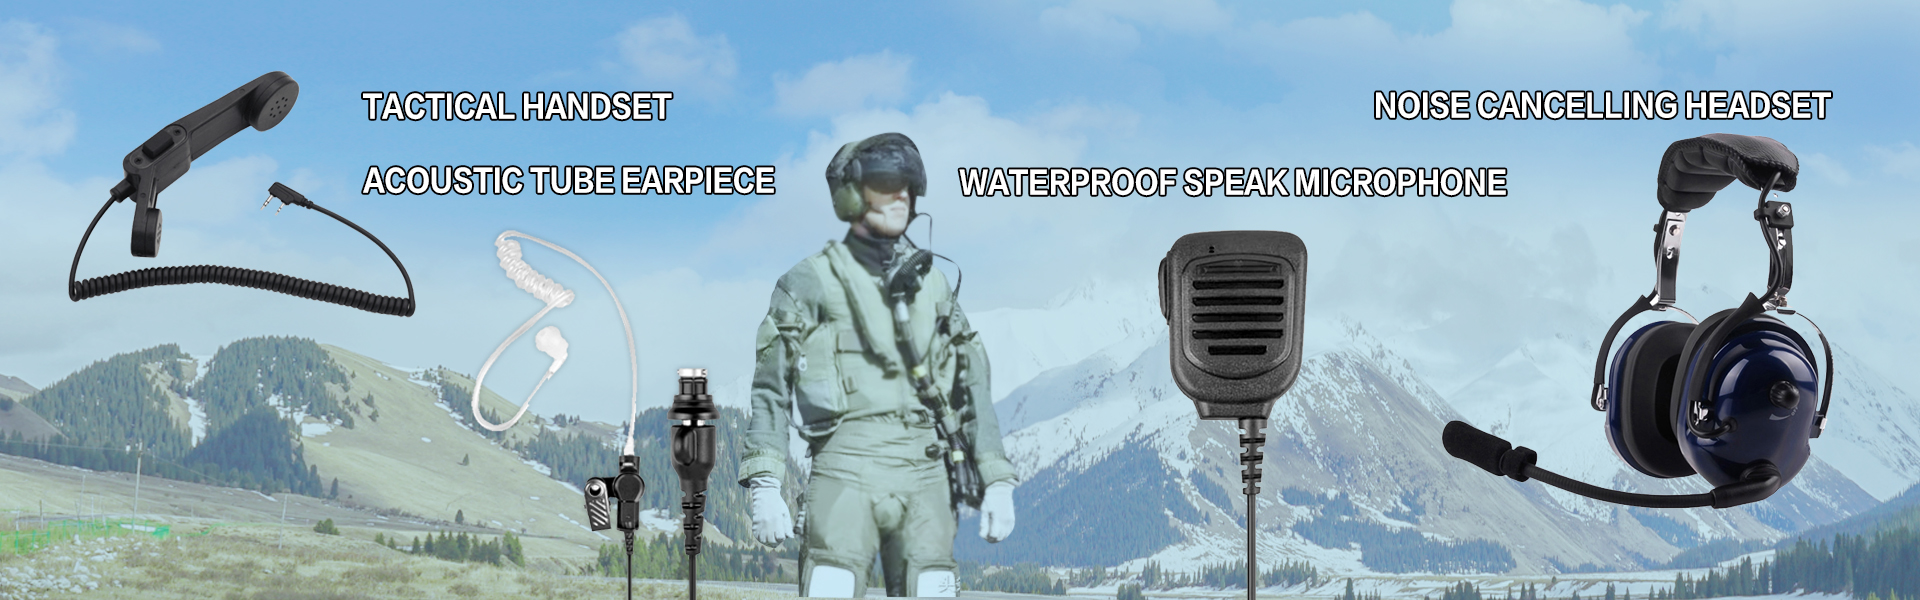 Tactical handset, noise cancelling headset, waterproof speaker microphone from HXKK